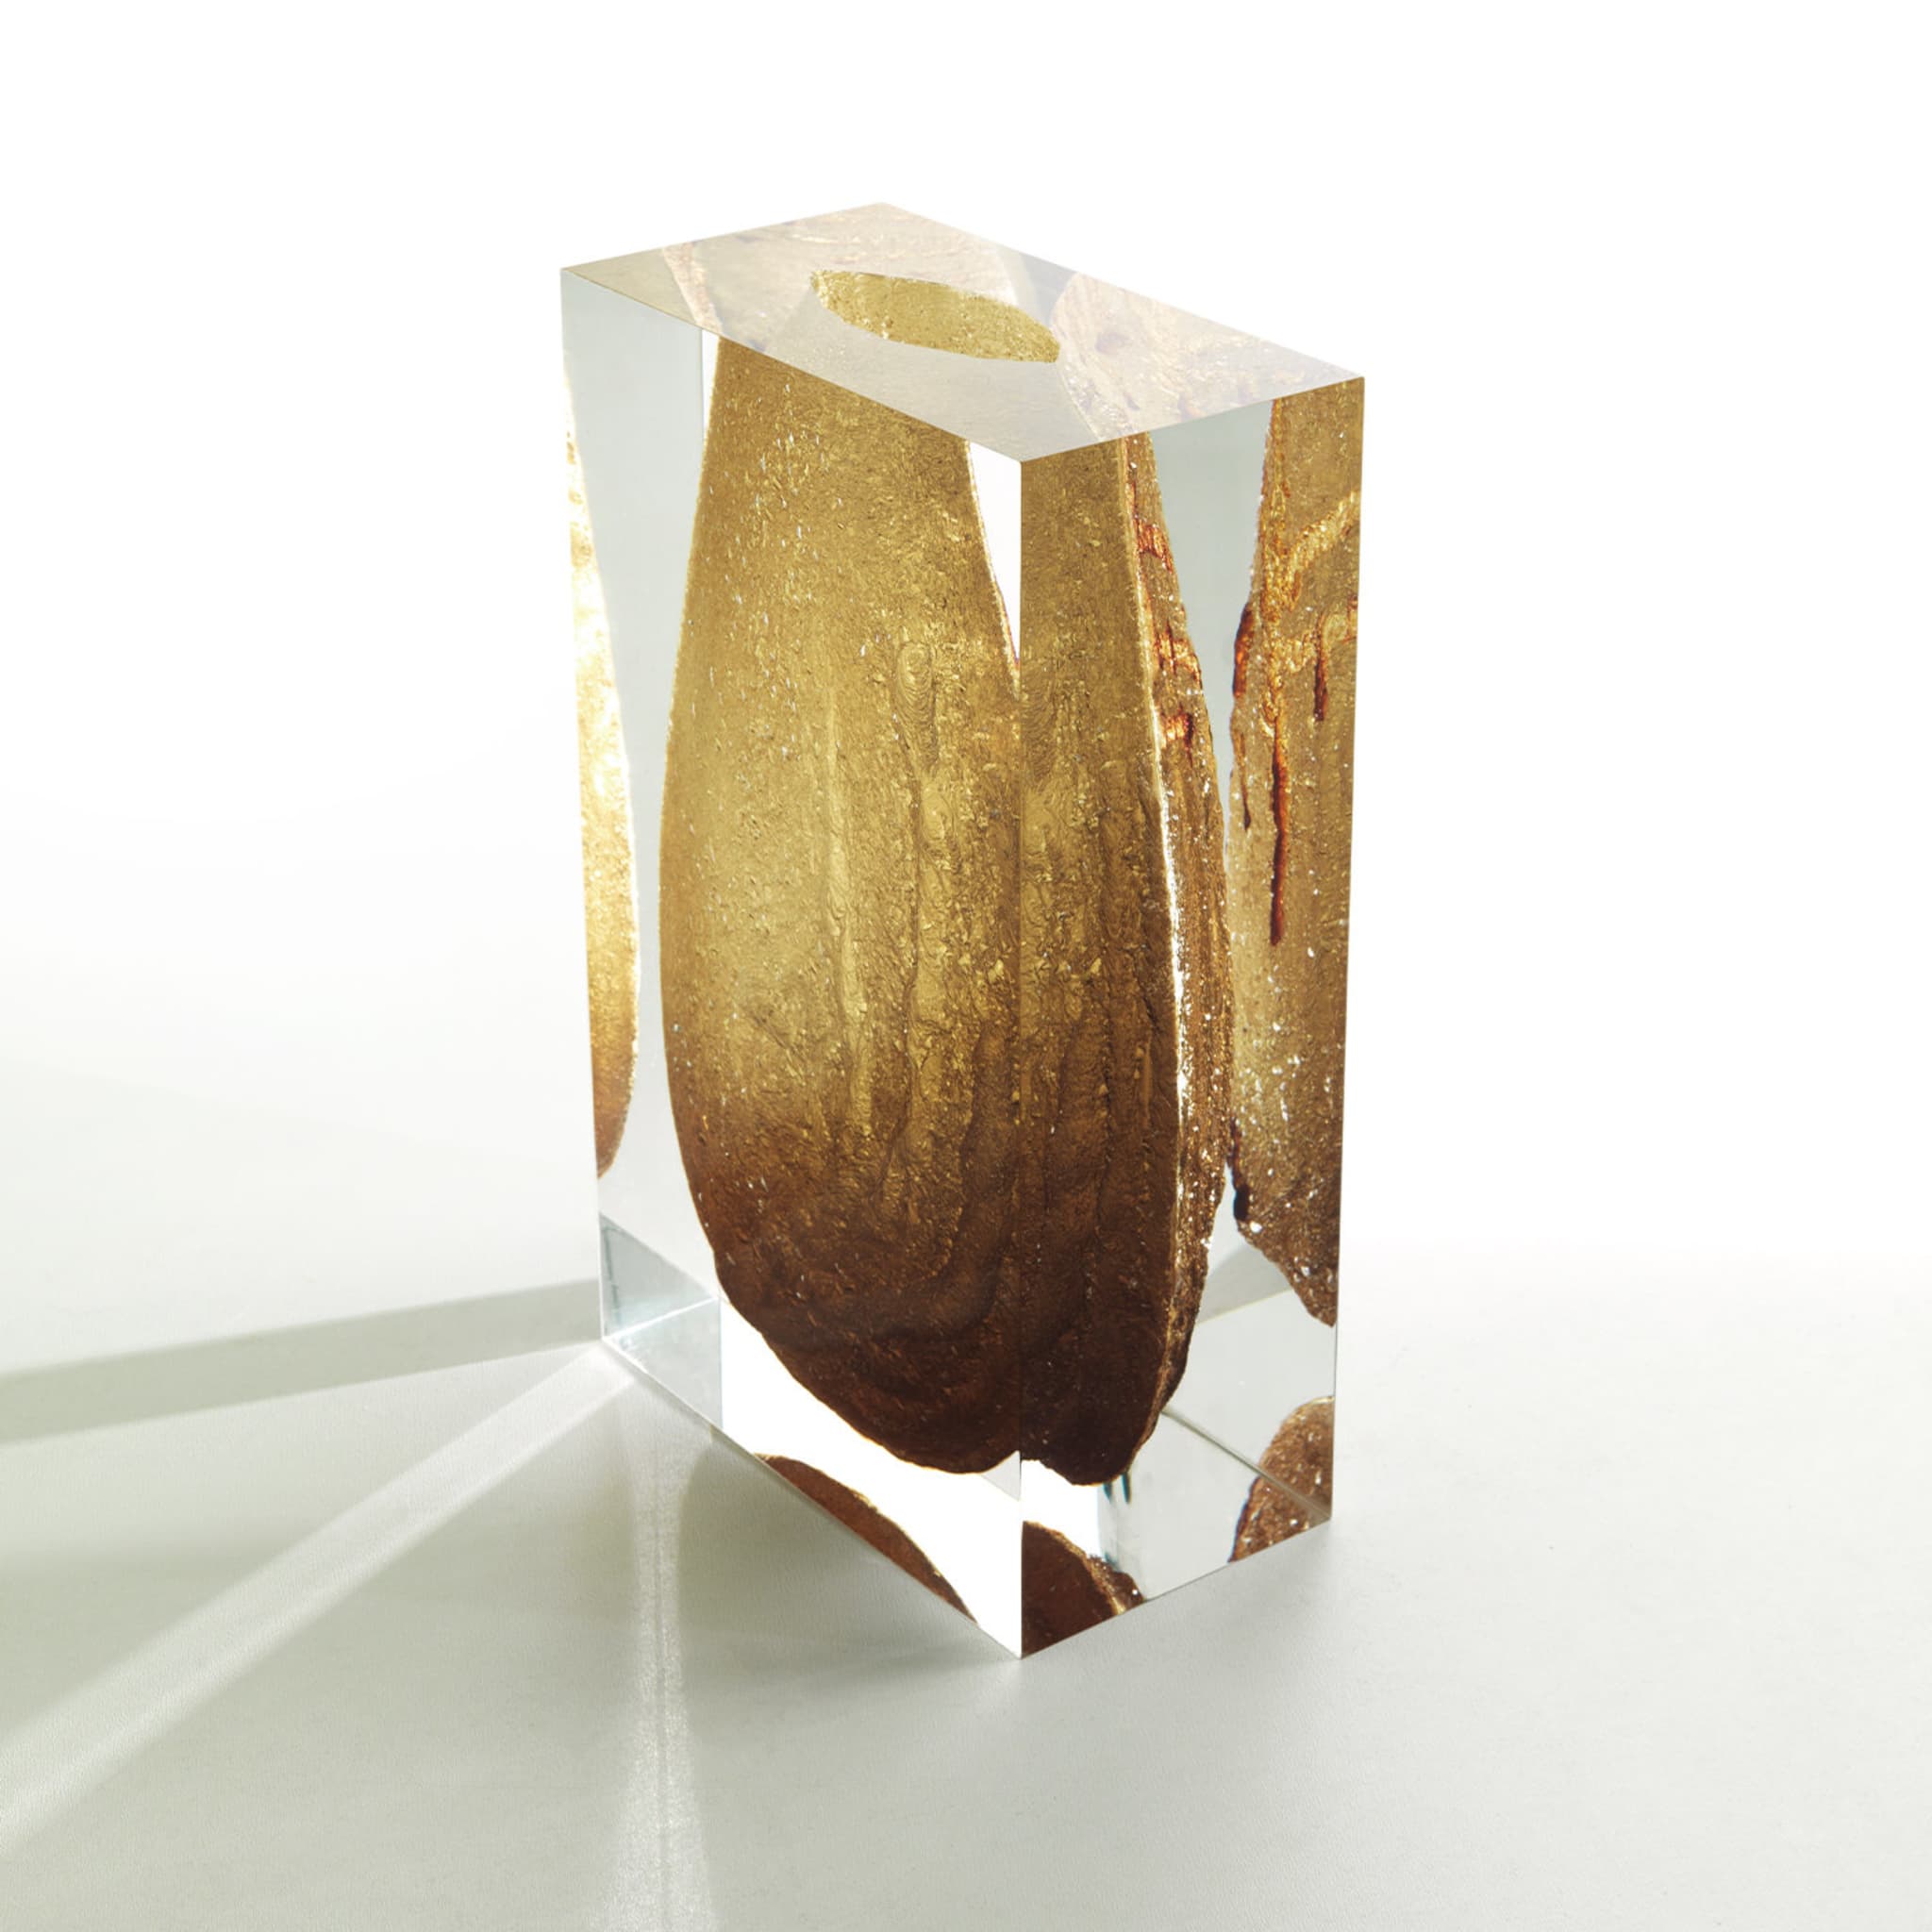 Glacoja Ochre Vase by Analogia Project - Alternative view 1